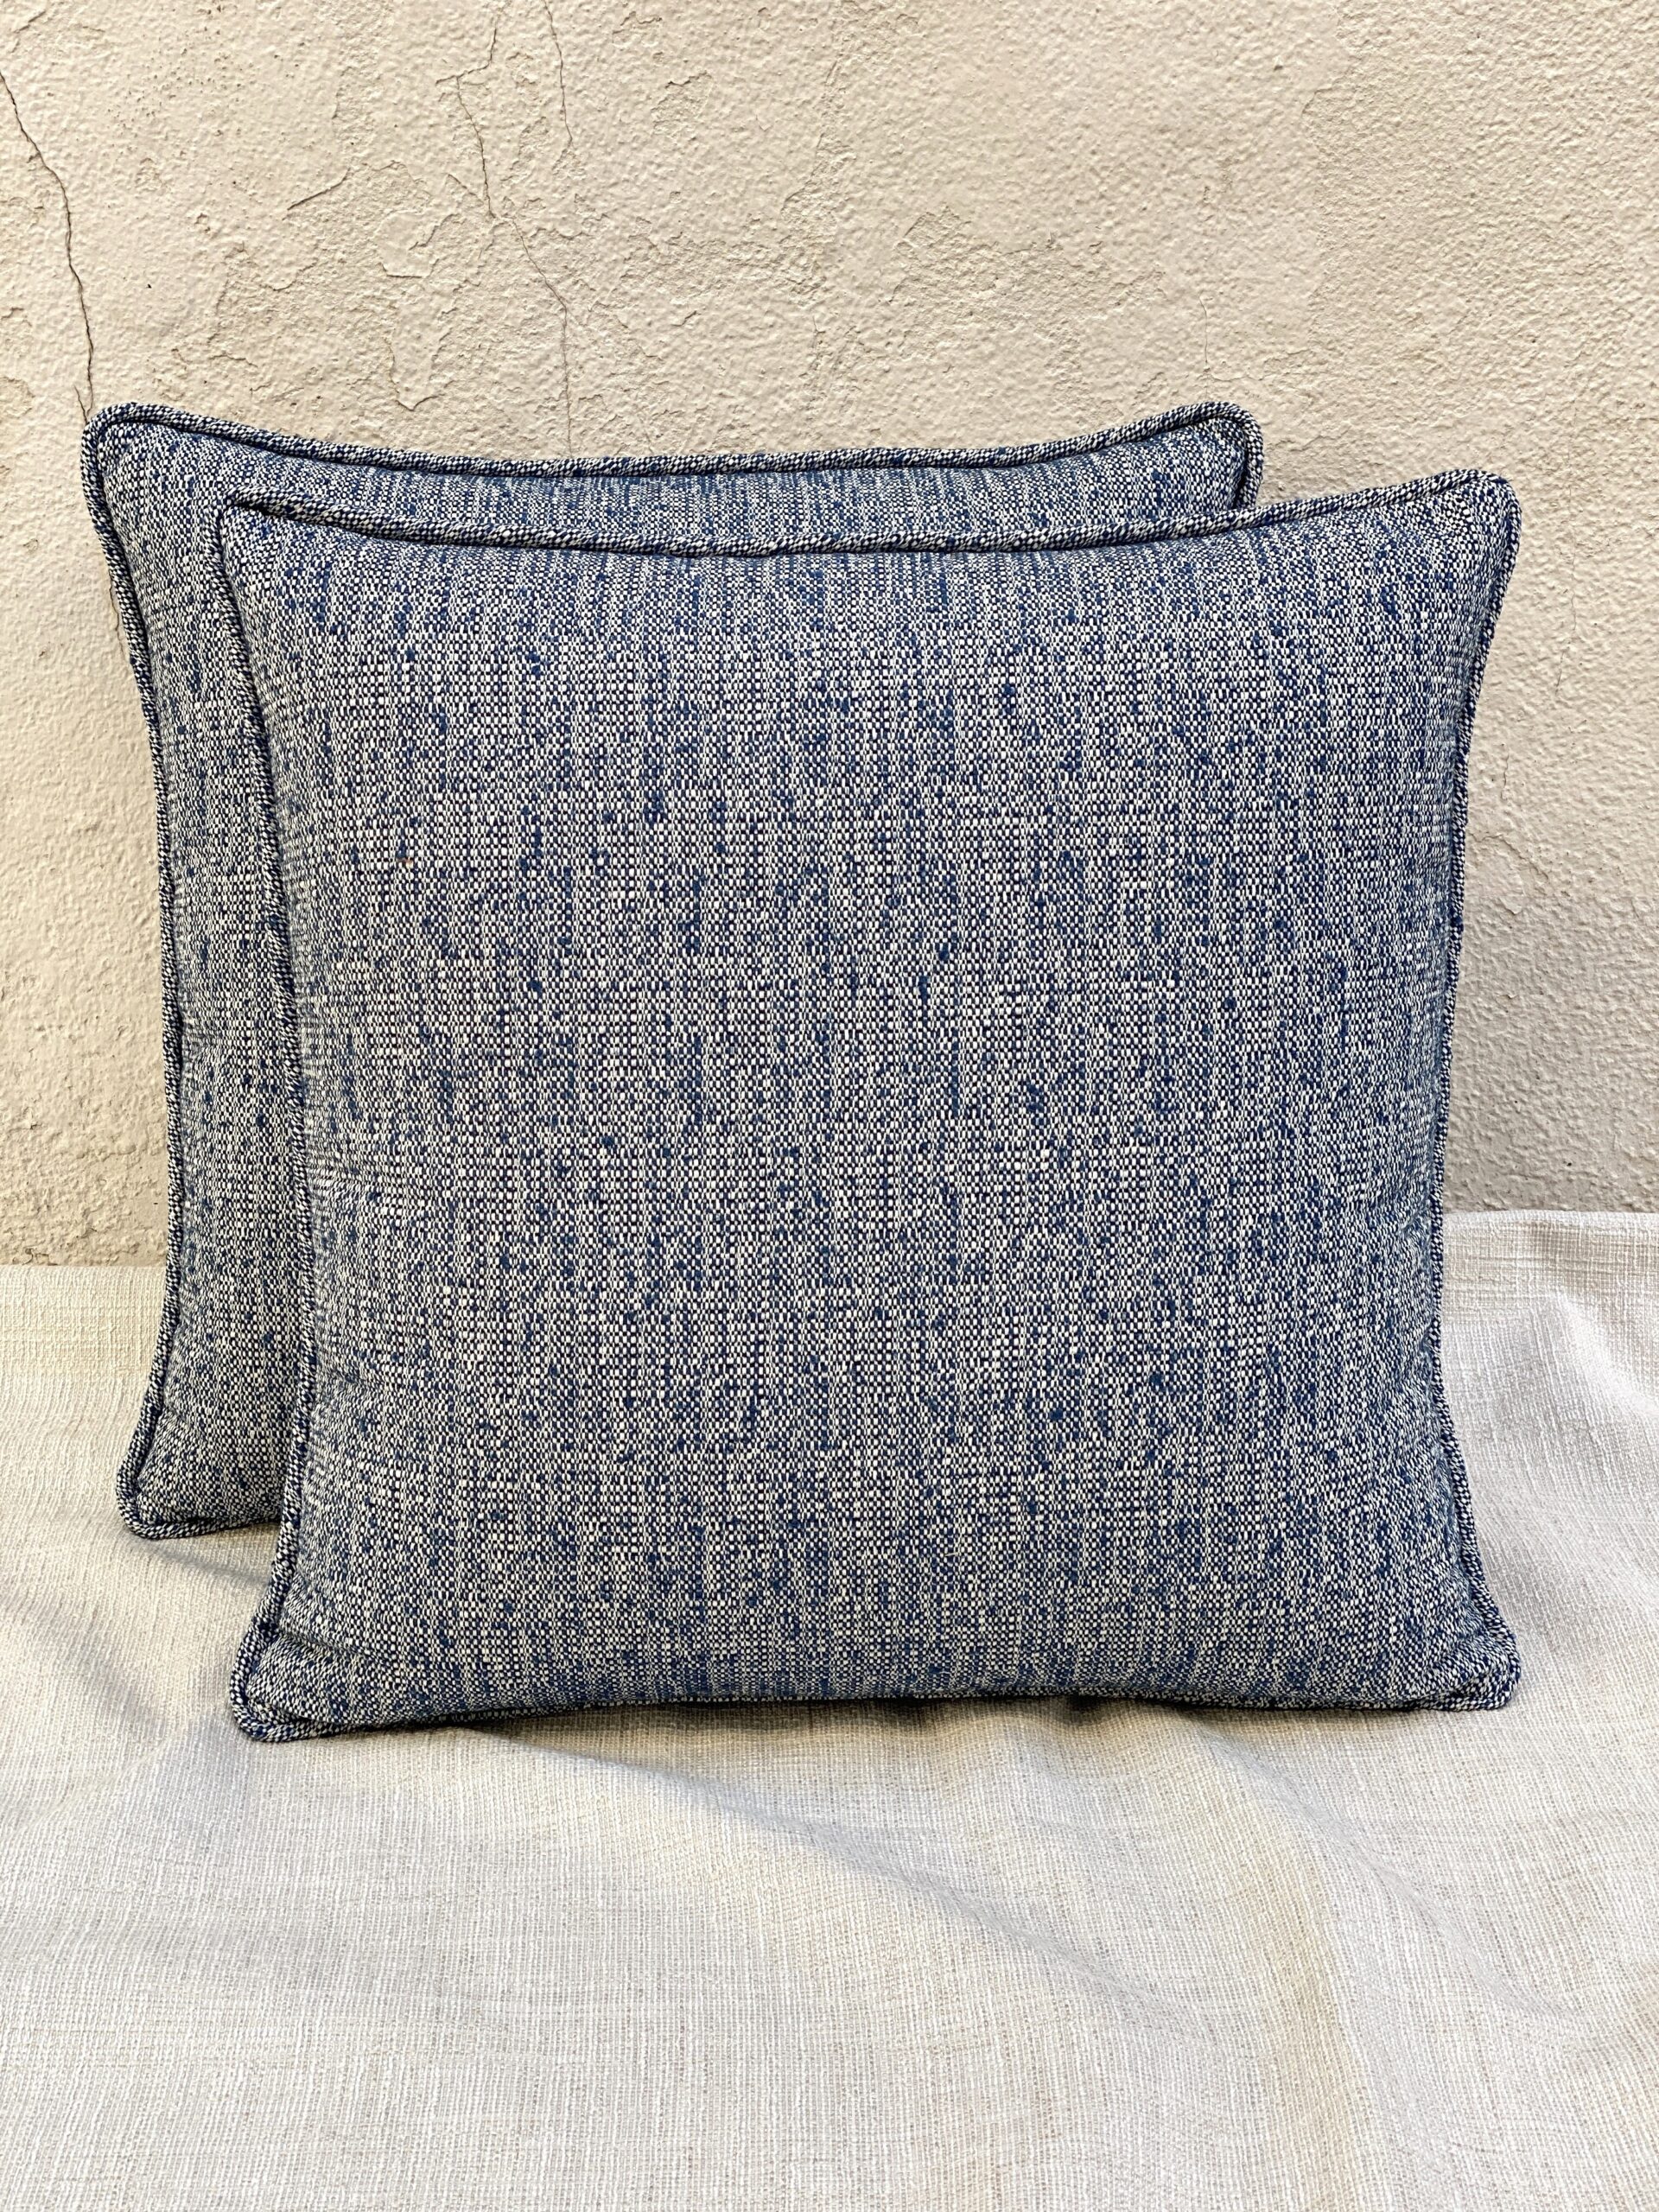 Erica Shamrock Textiles Perry Pillows